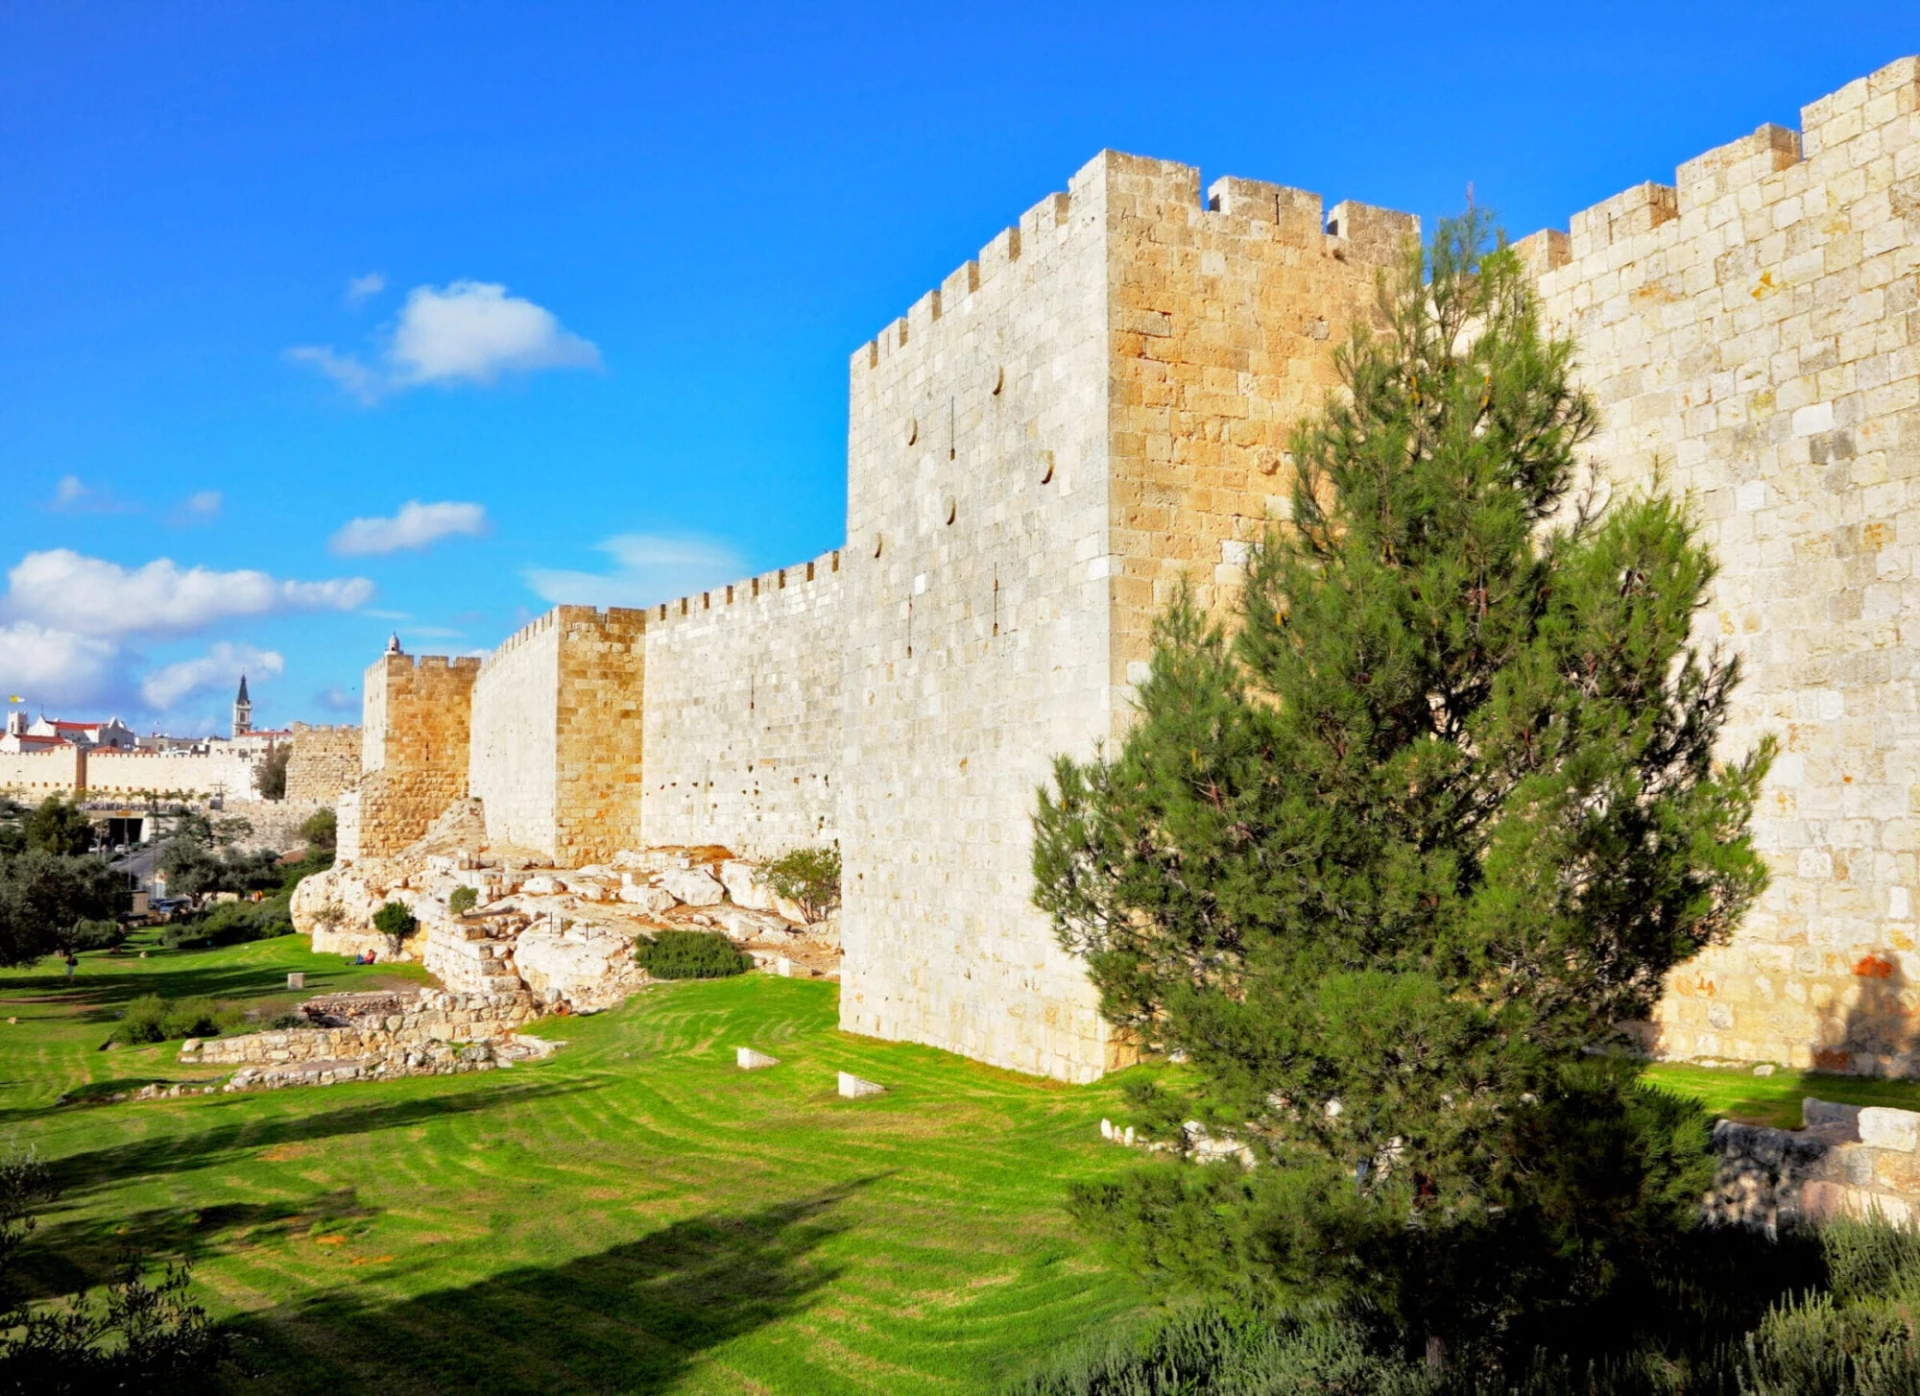 Walls of Jerusalem: The First Wall